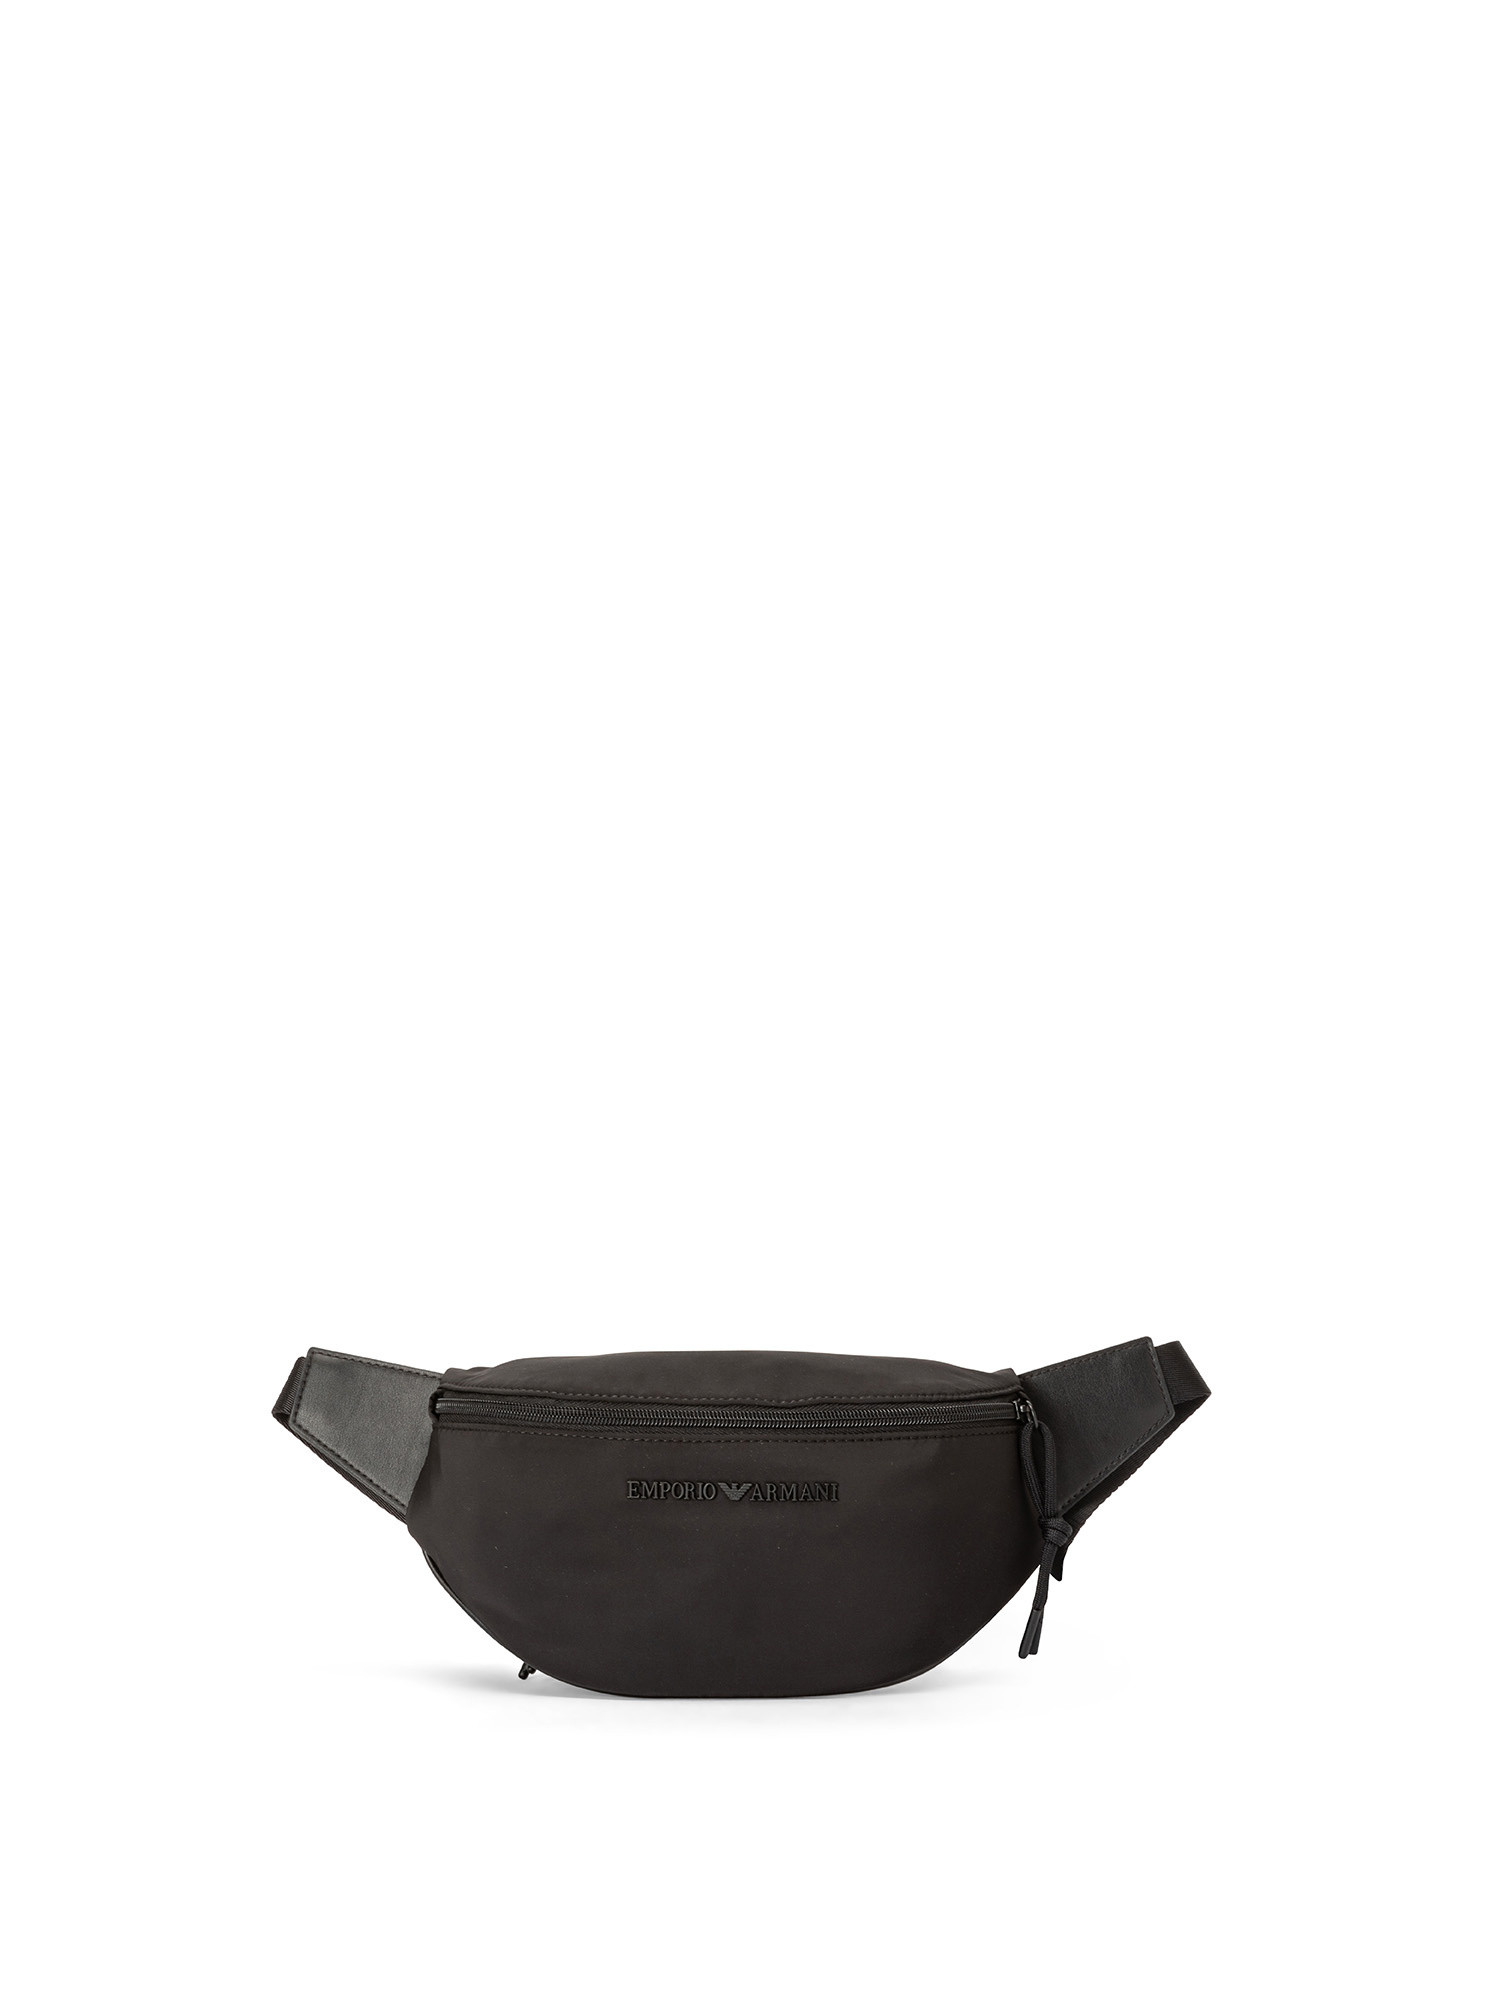 Emporio Armani -  Waist bag with logo, Black, large image number 1